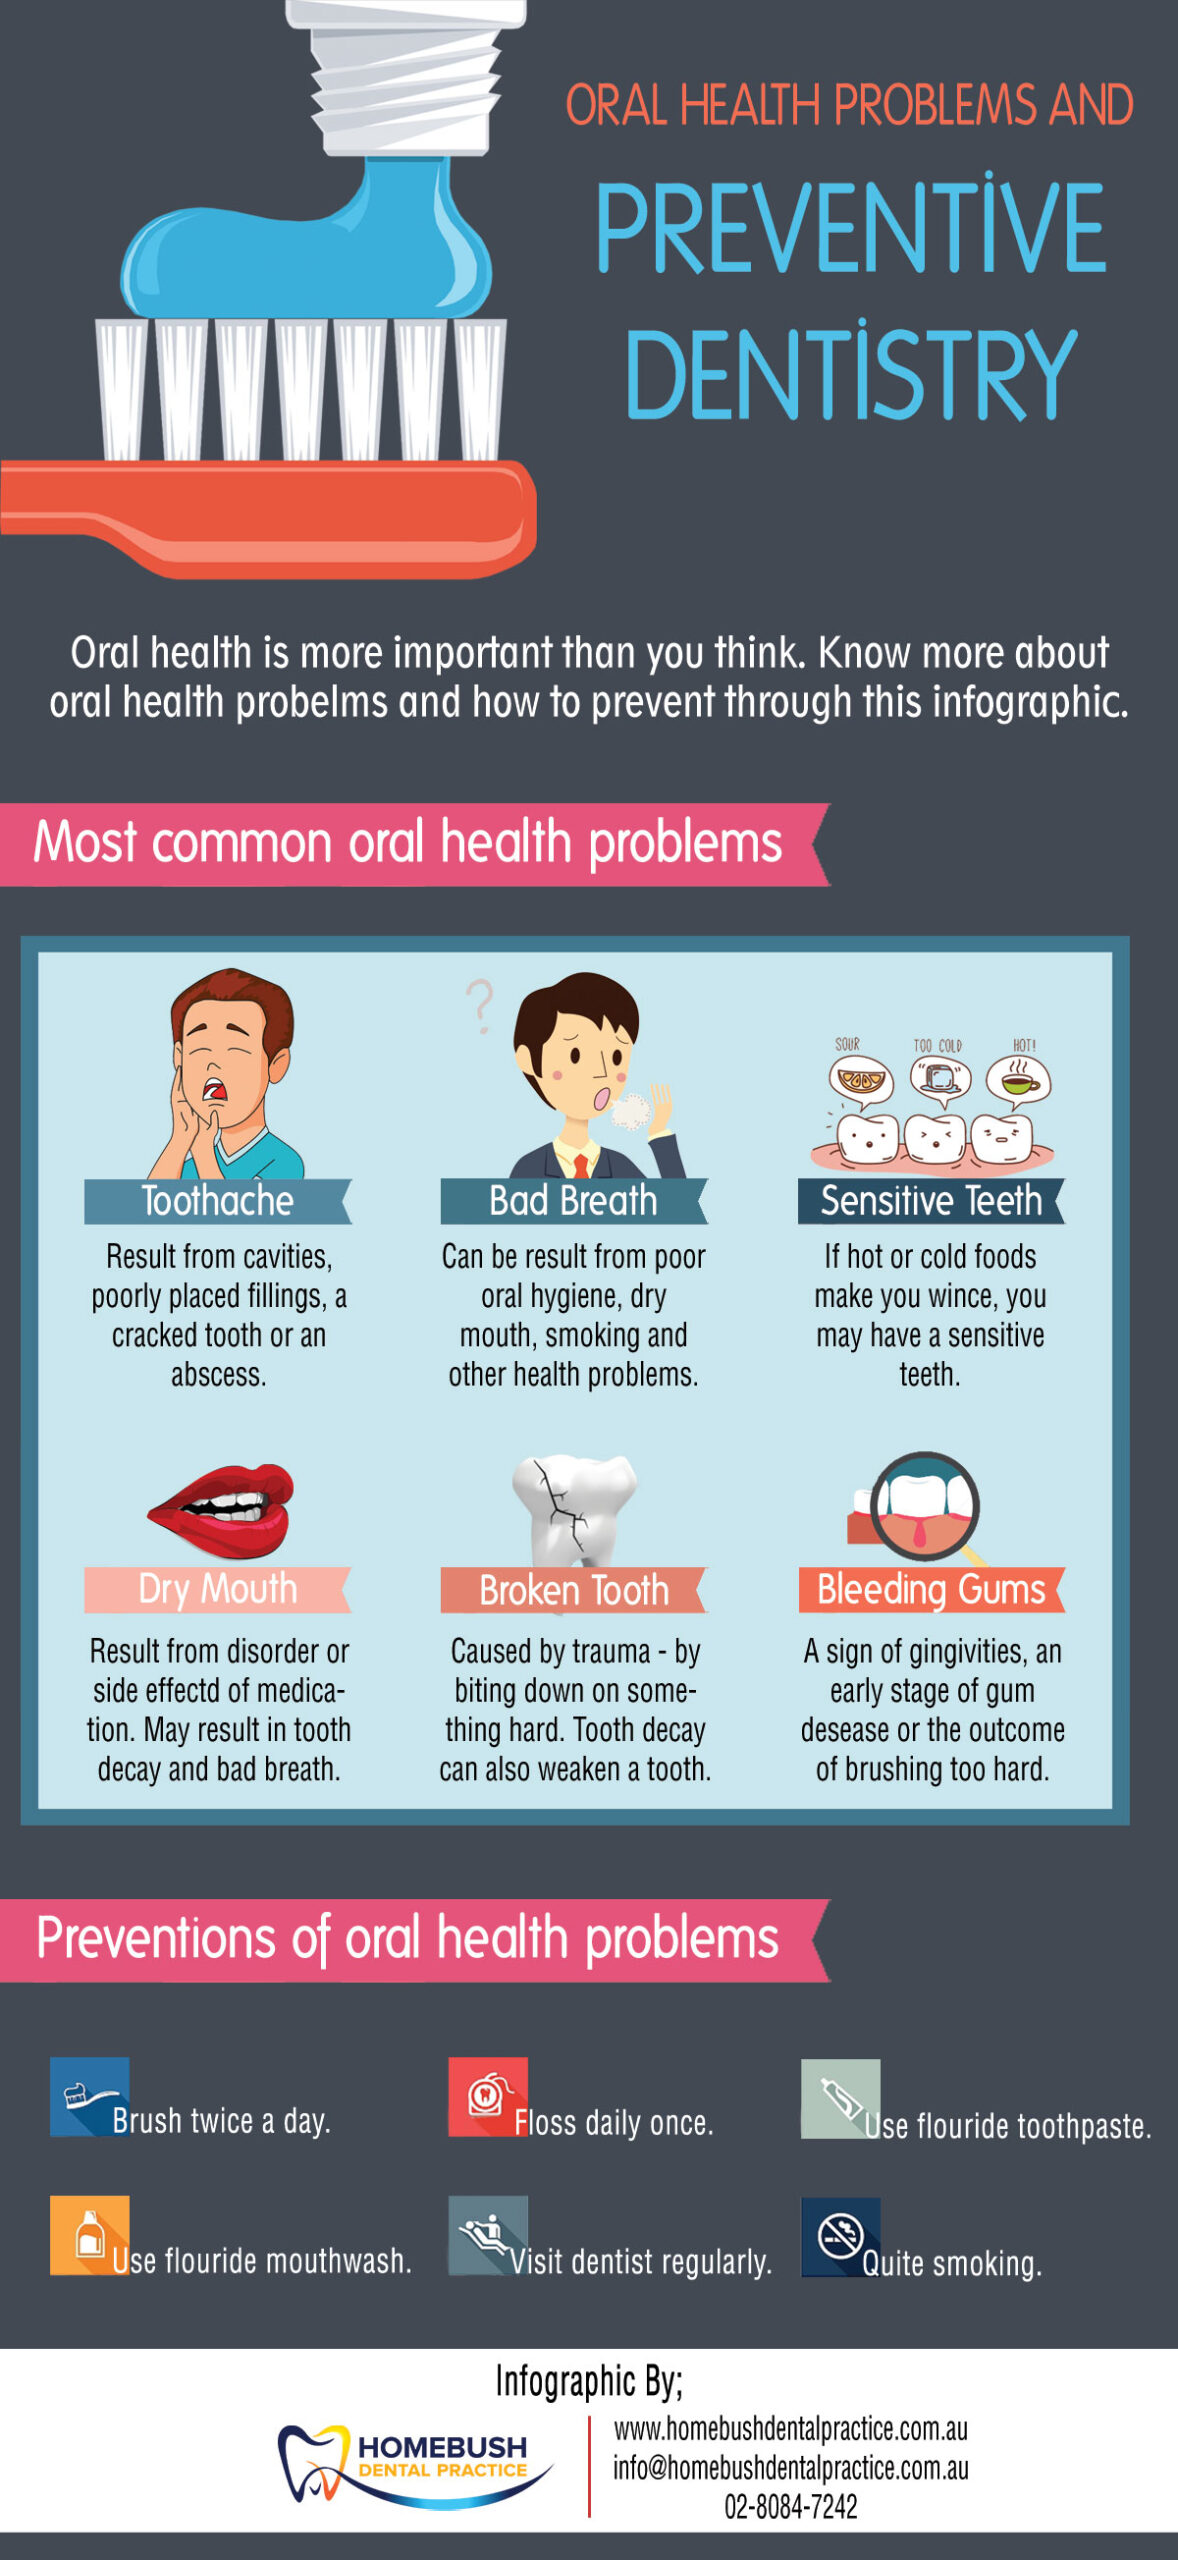 5 Best Dental Infographics of 2014